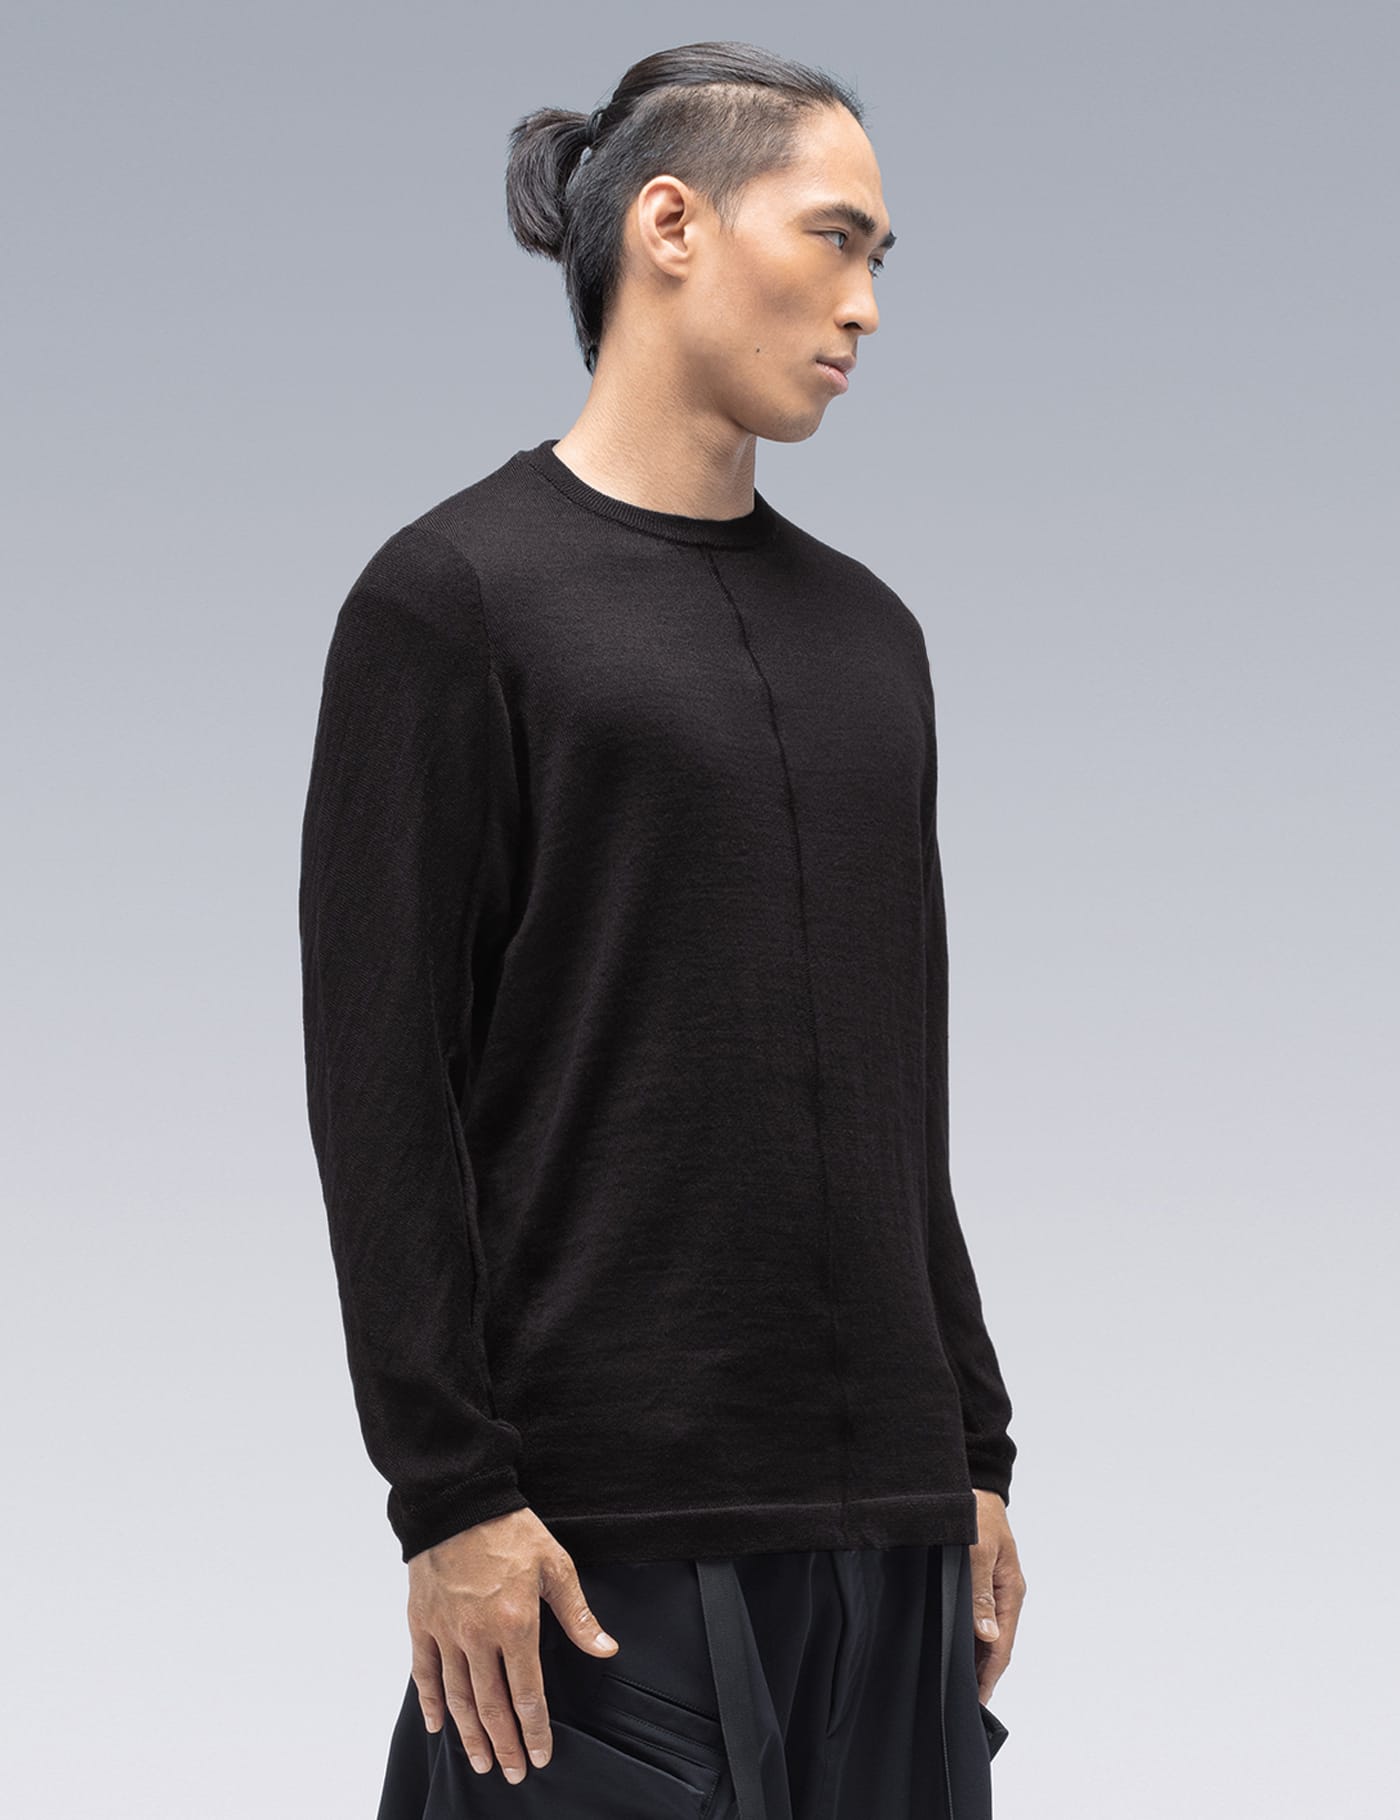 ACRONYM - S23-AK Cashllama Long Sleeve Sweater | HBX - Globally